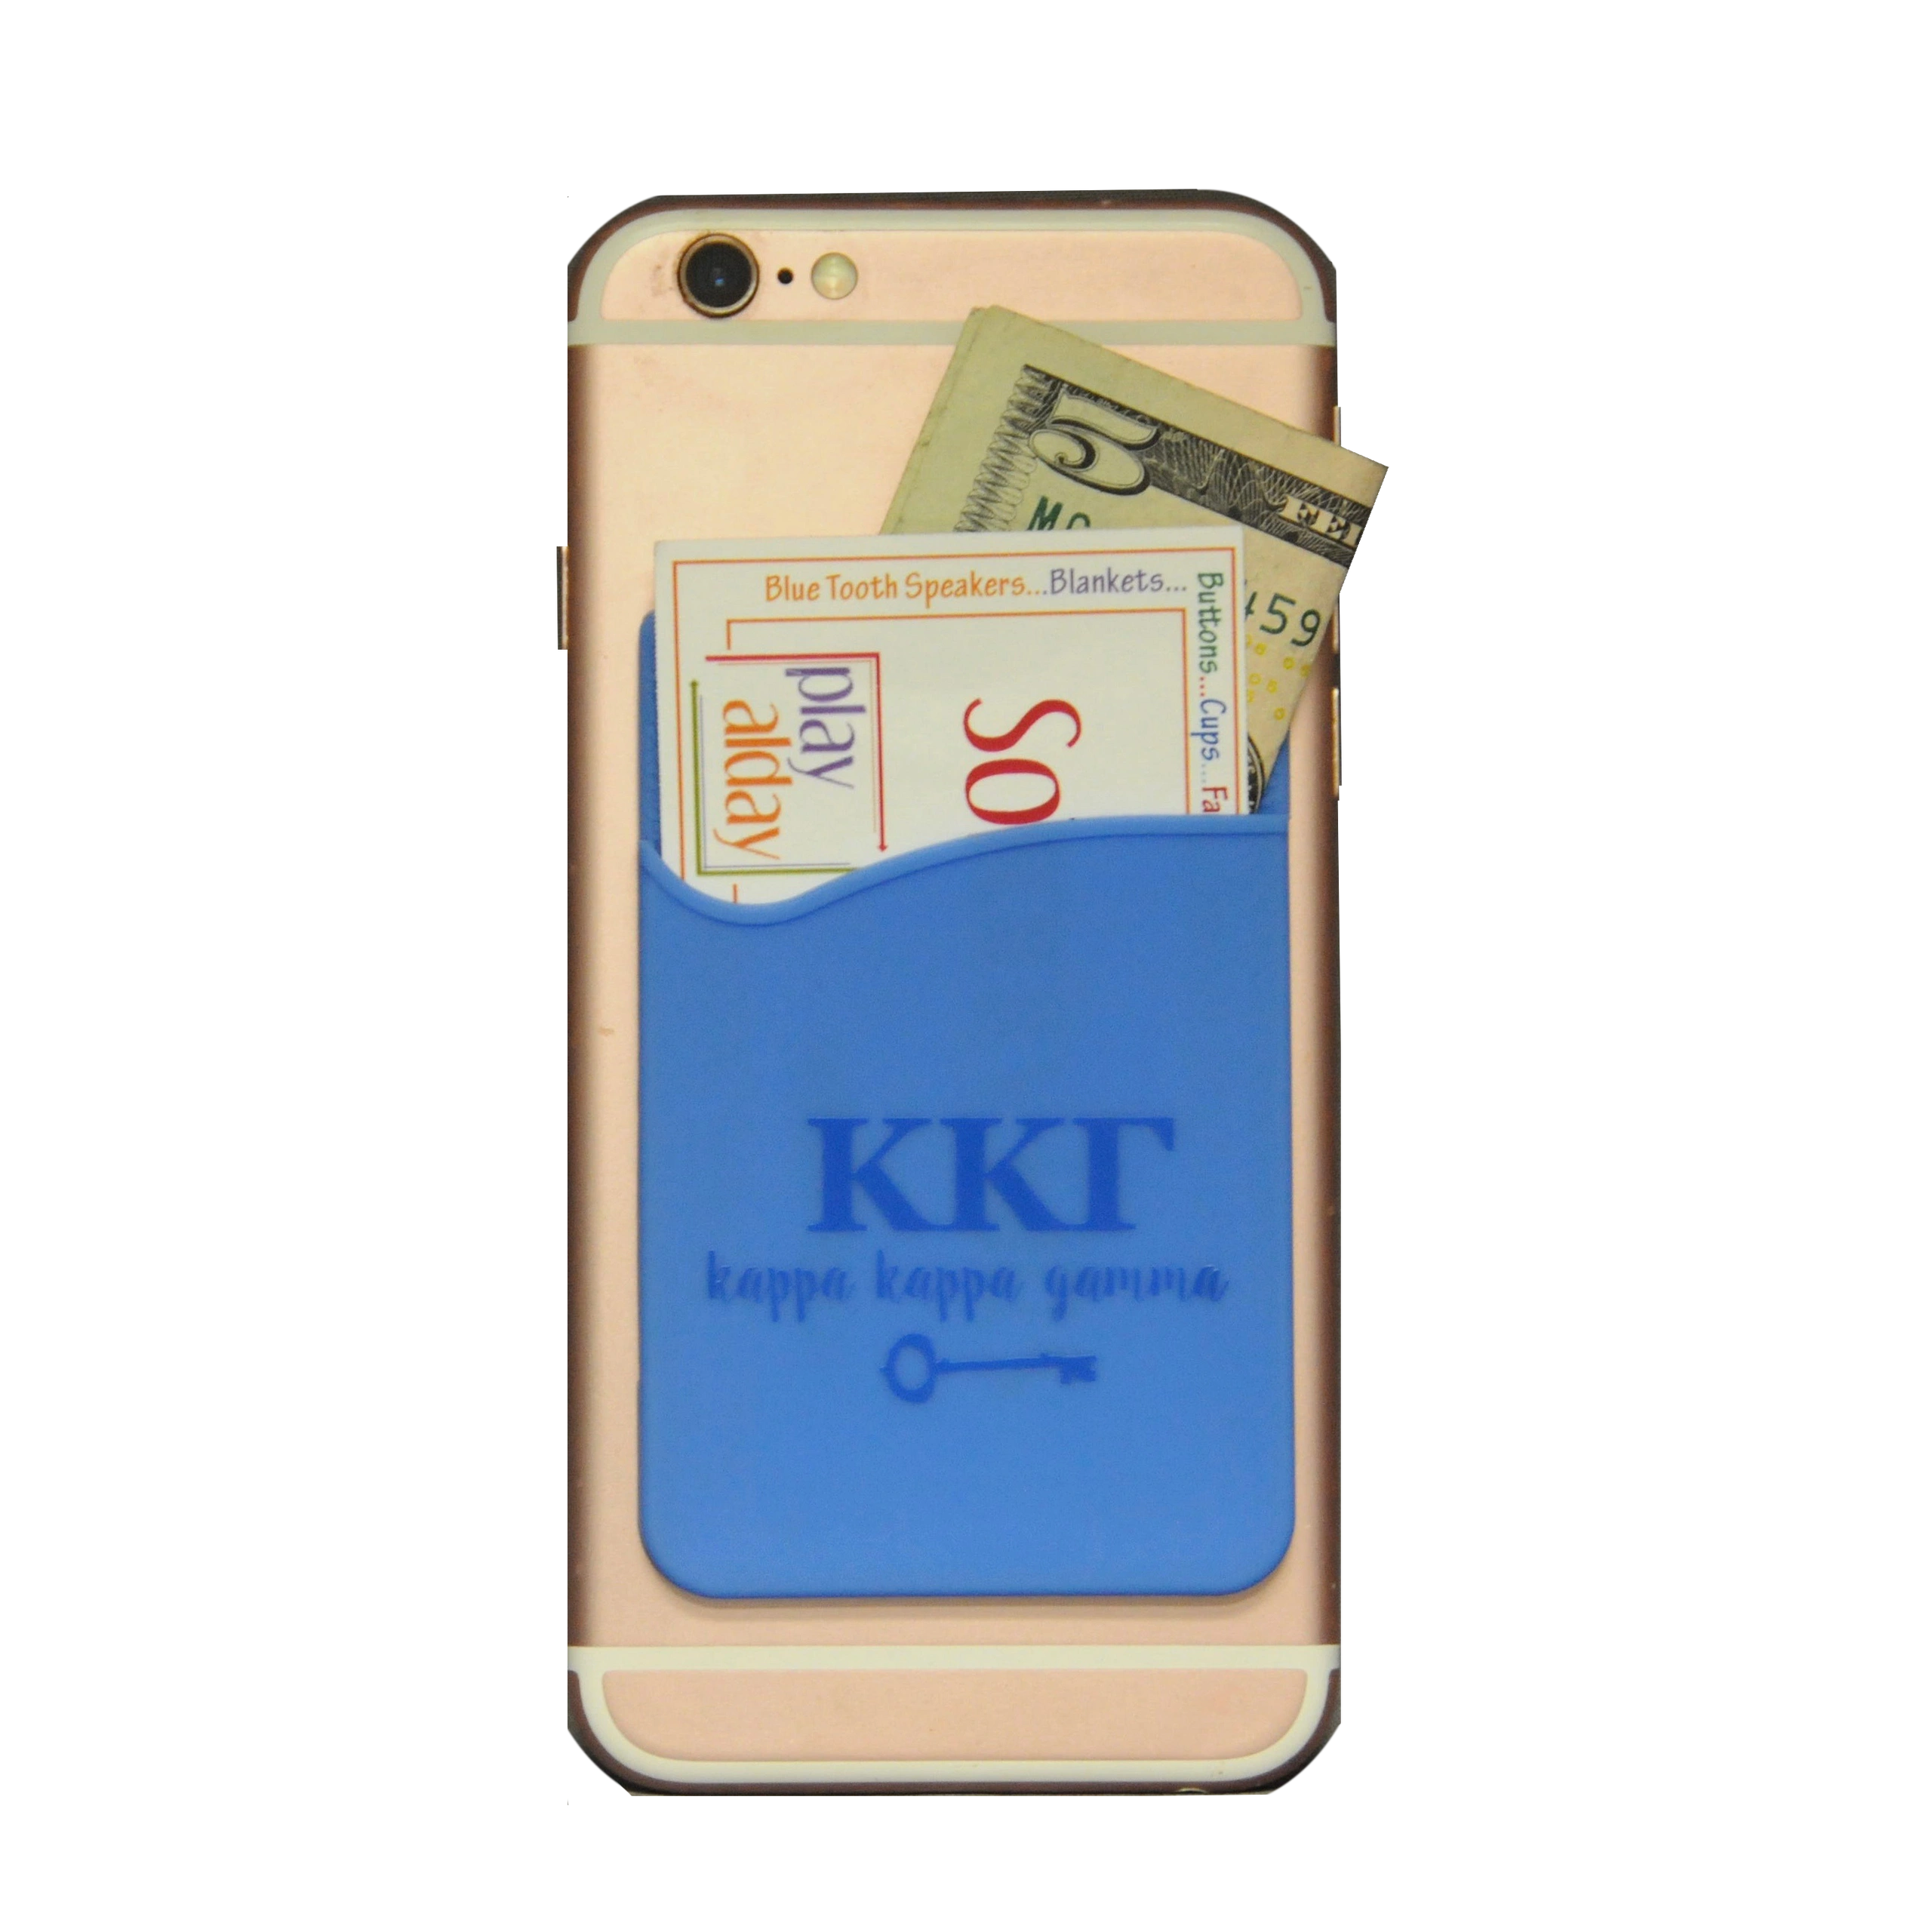 Kappa Kappa Gamma Cell Phone Pocket – Light Blue